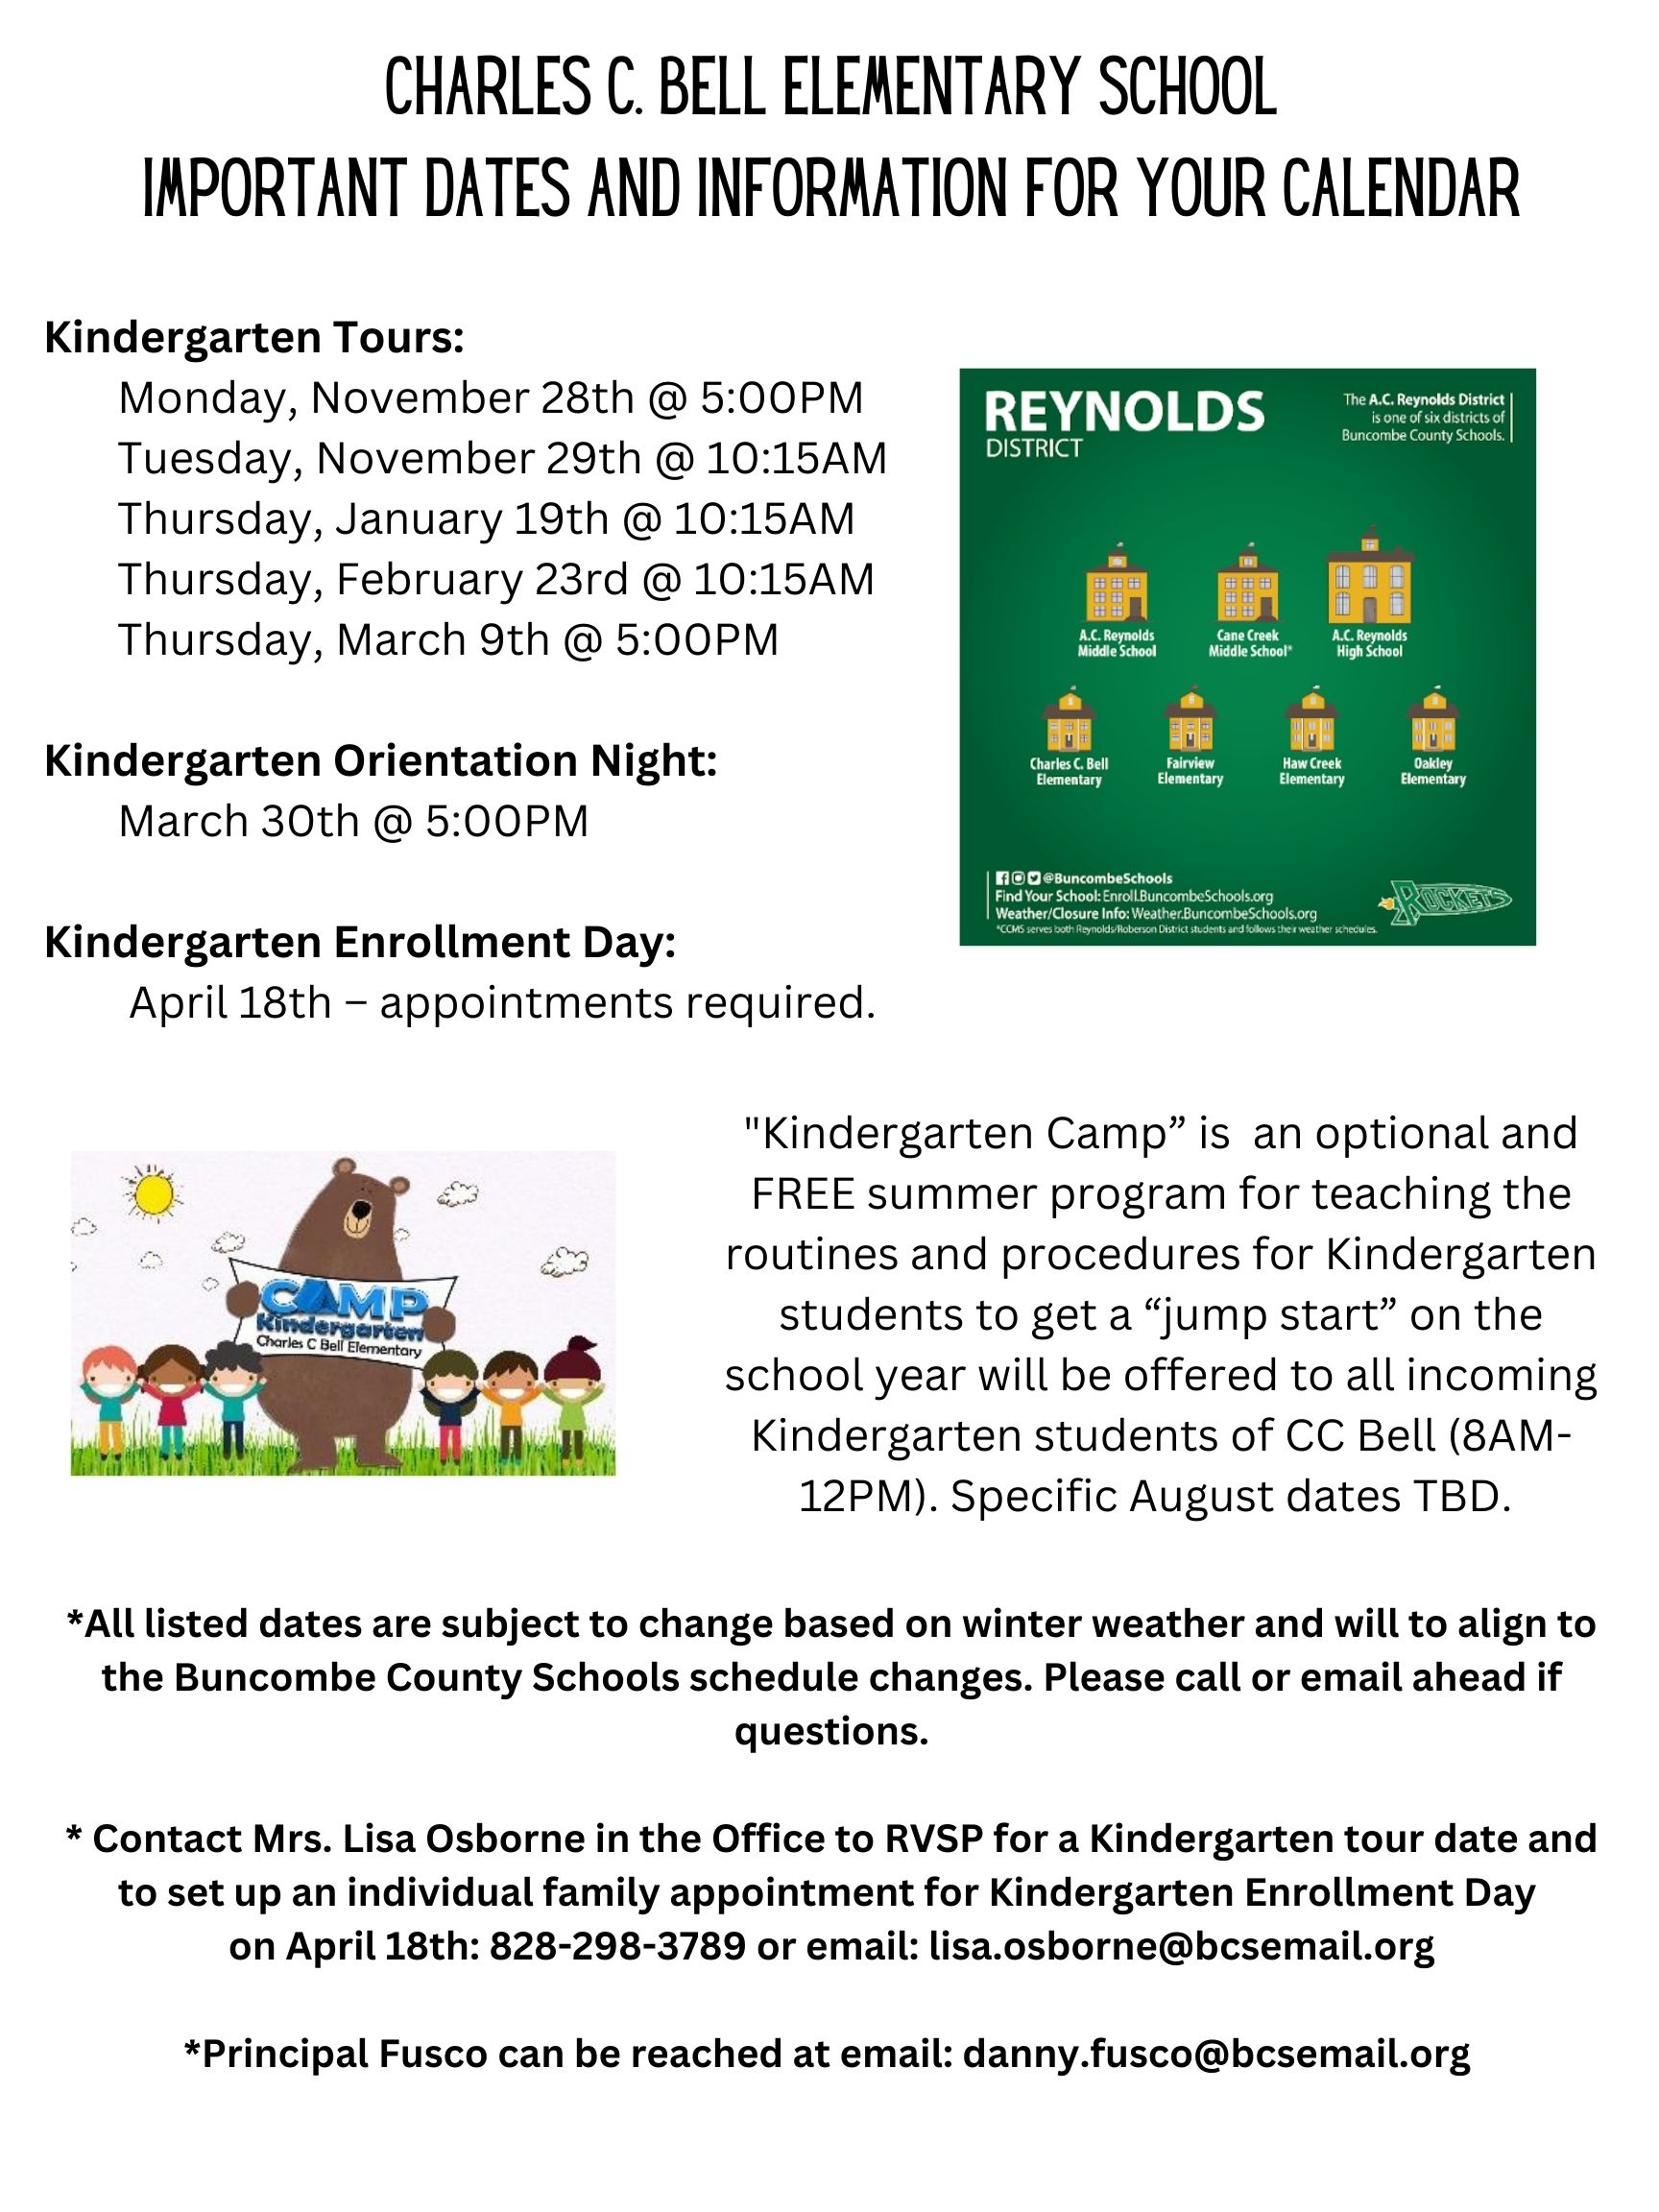 Information for Rising Kindergarteners